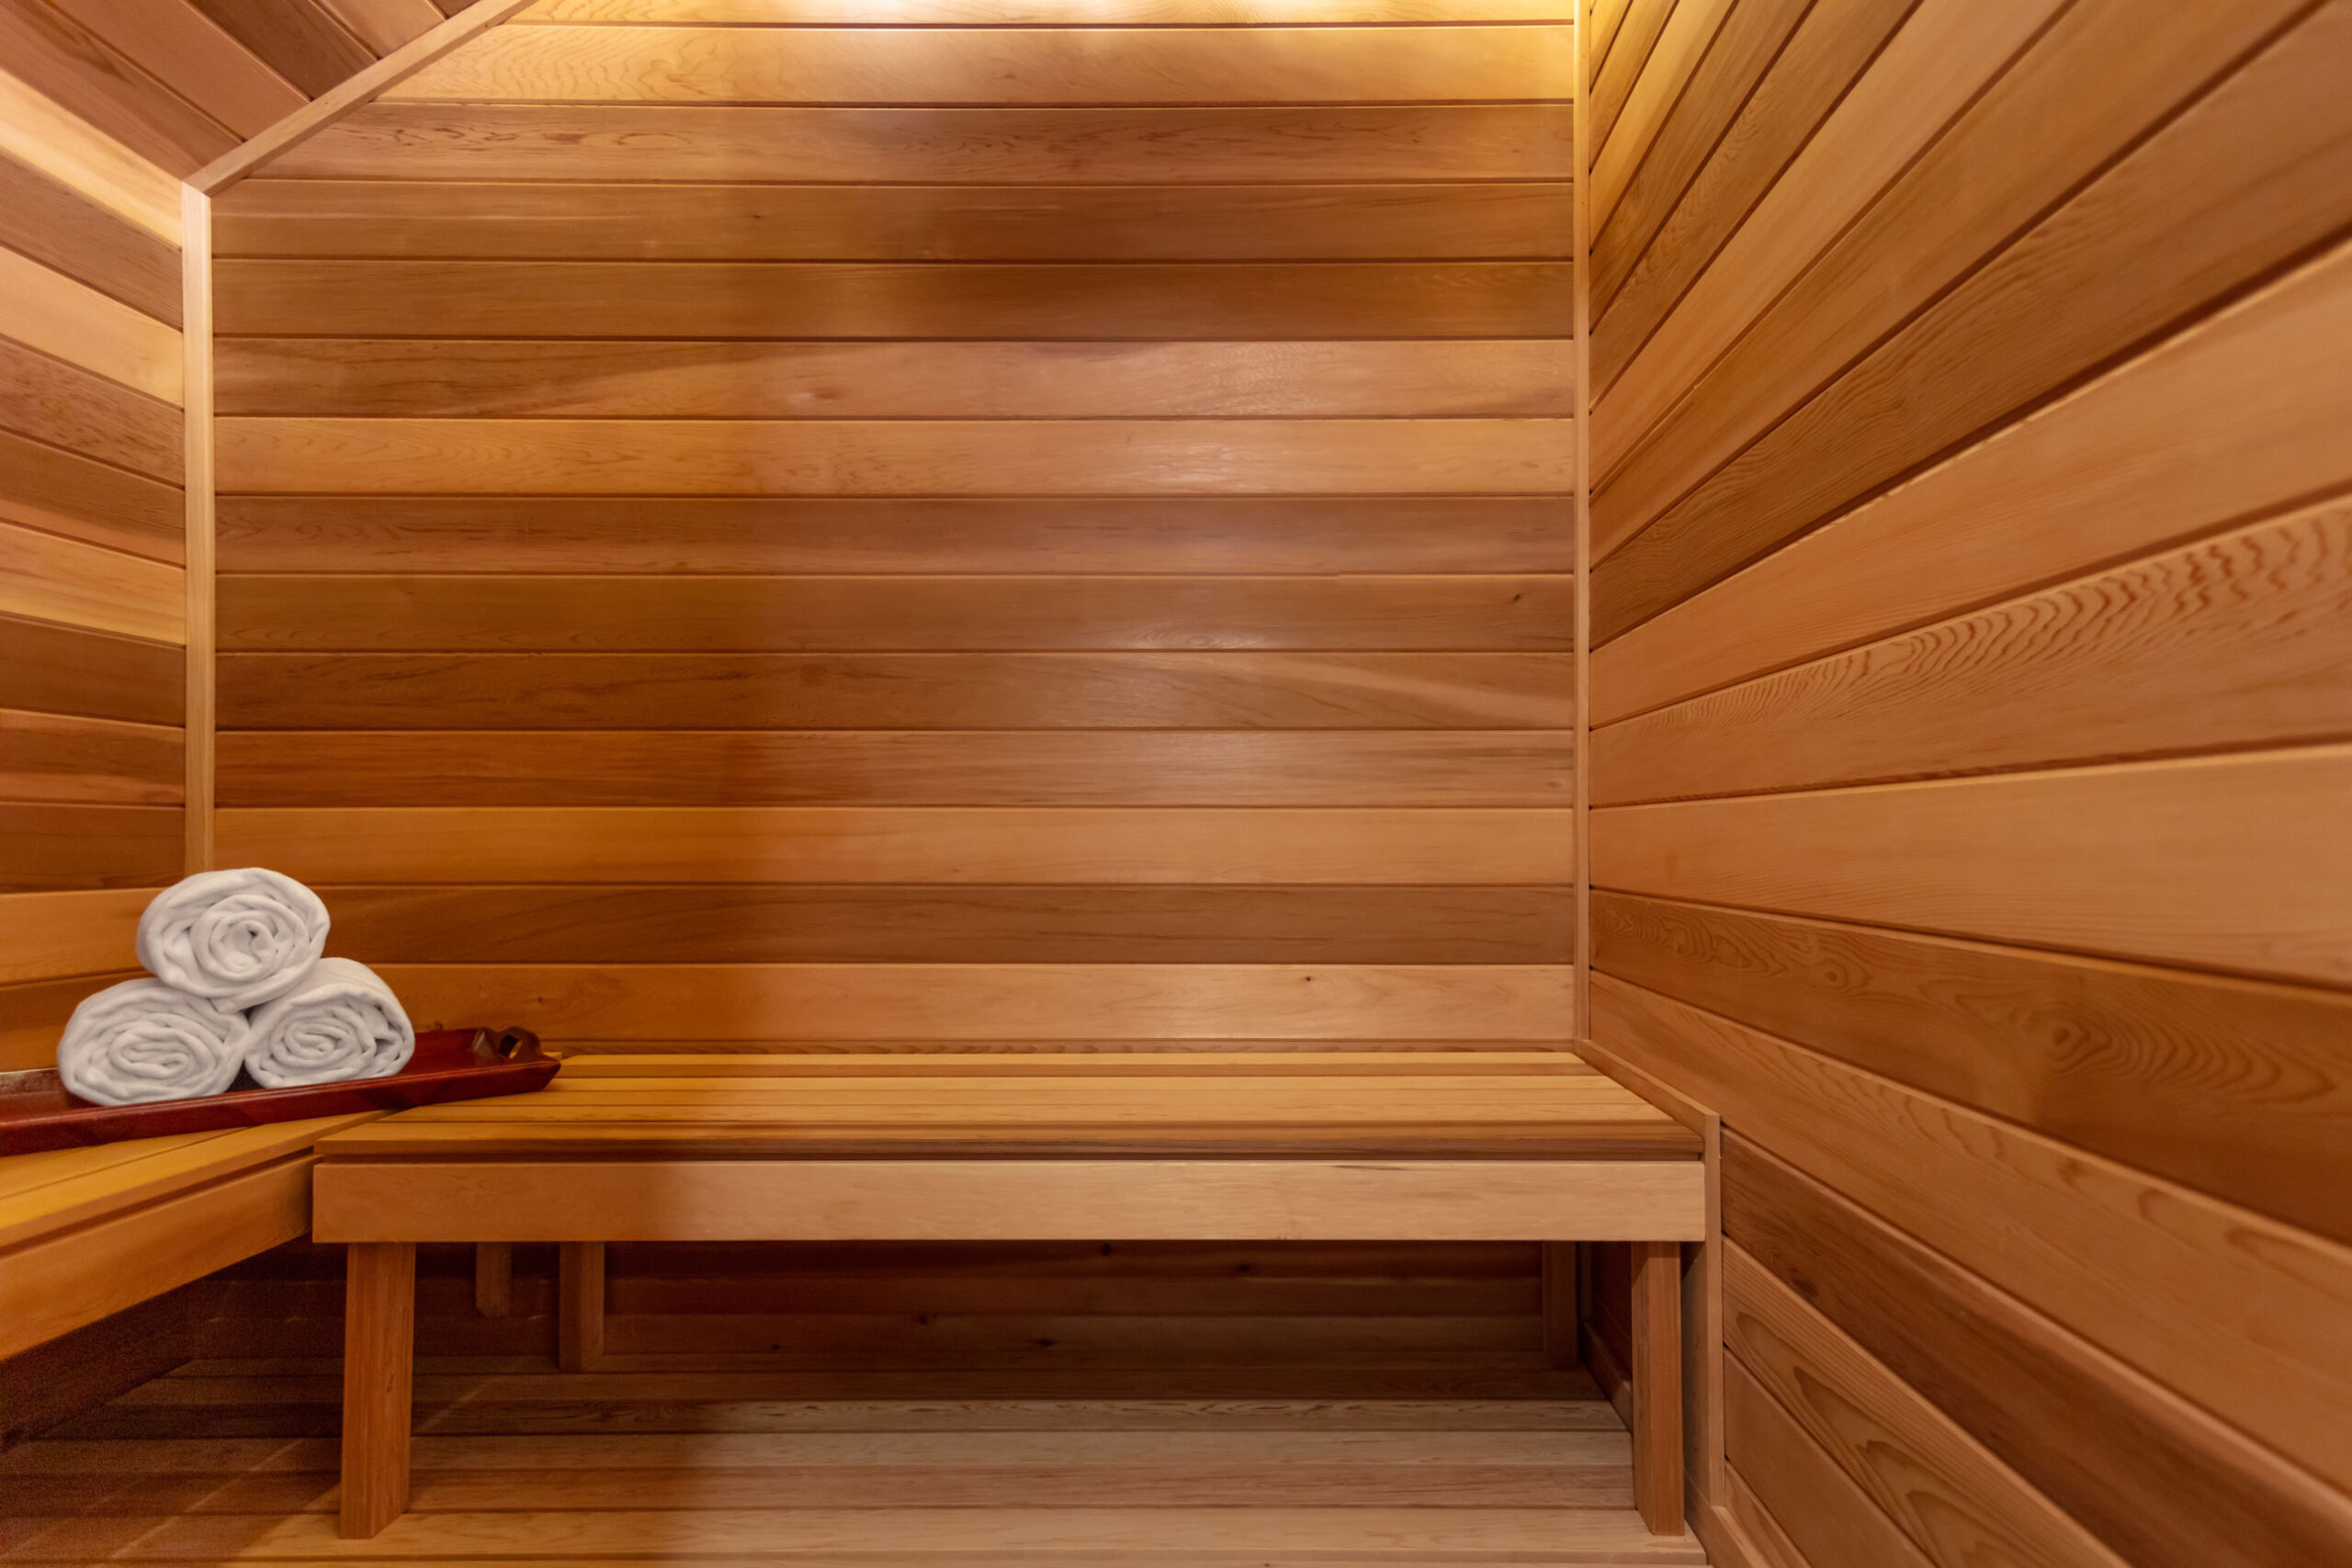 internal shot of sauna room with towels